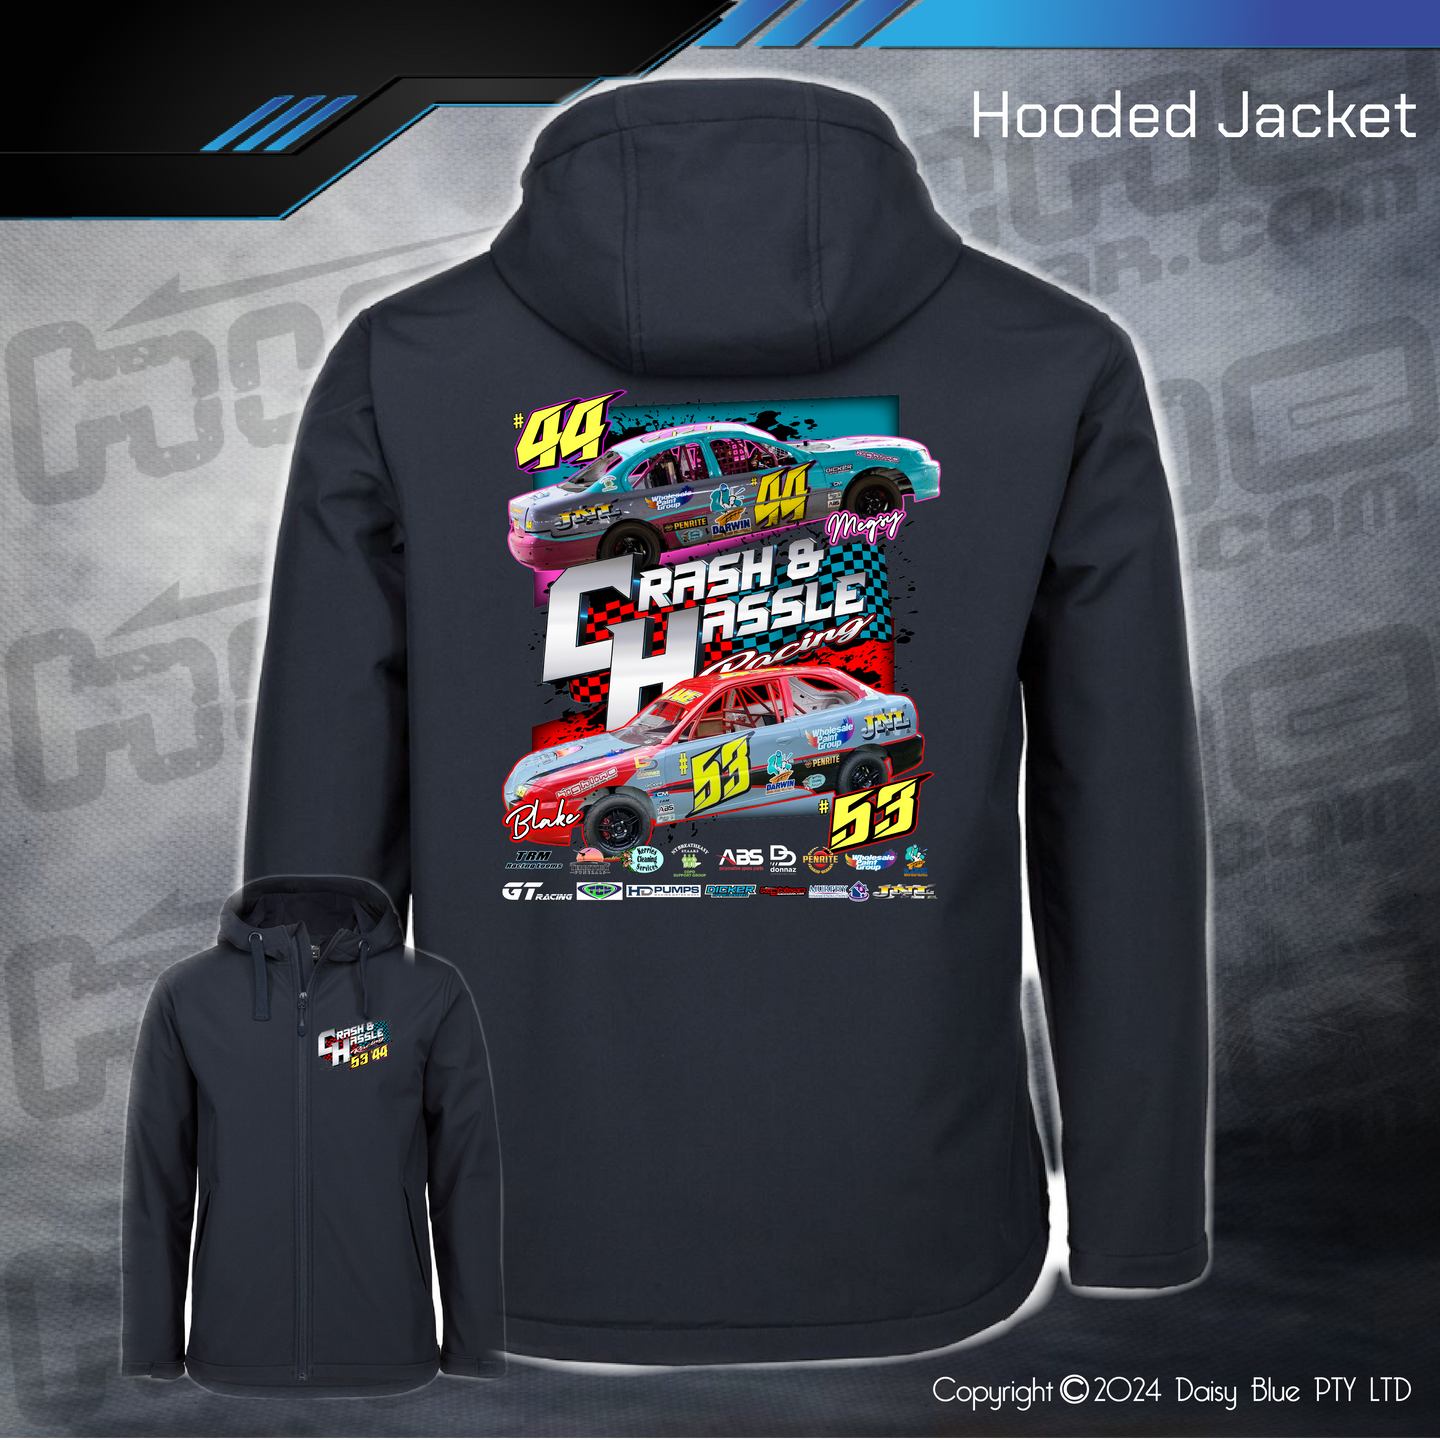 Hooded Jacket - Crash N Hassle Racing